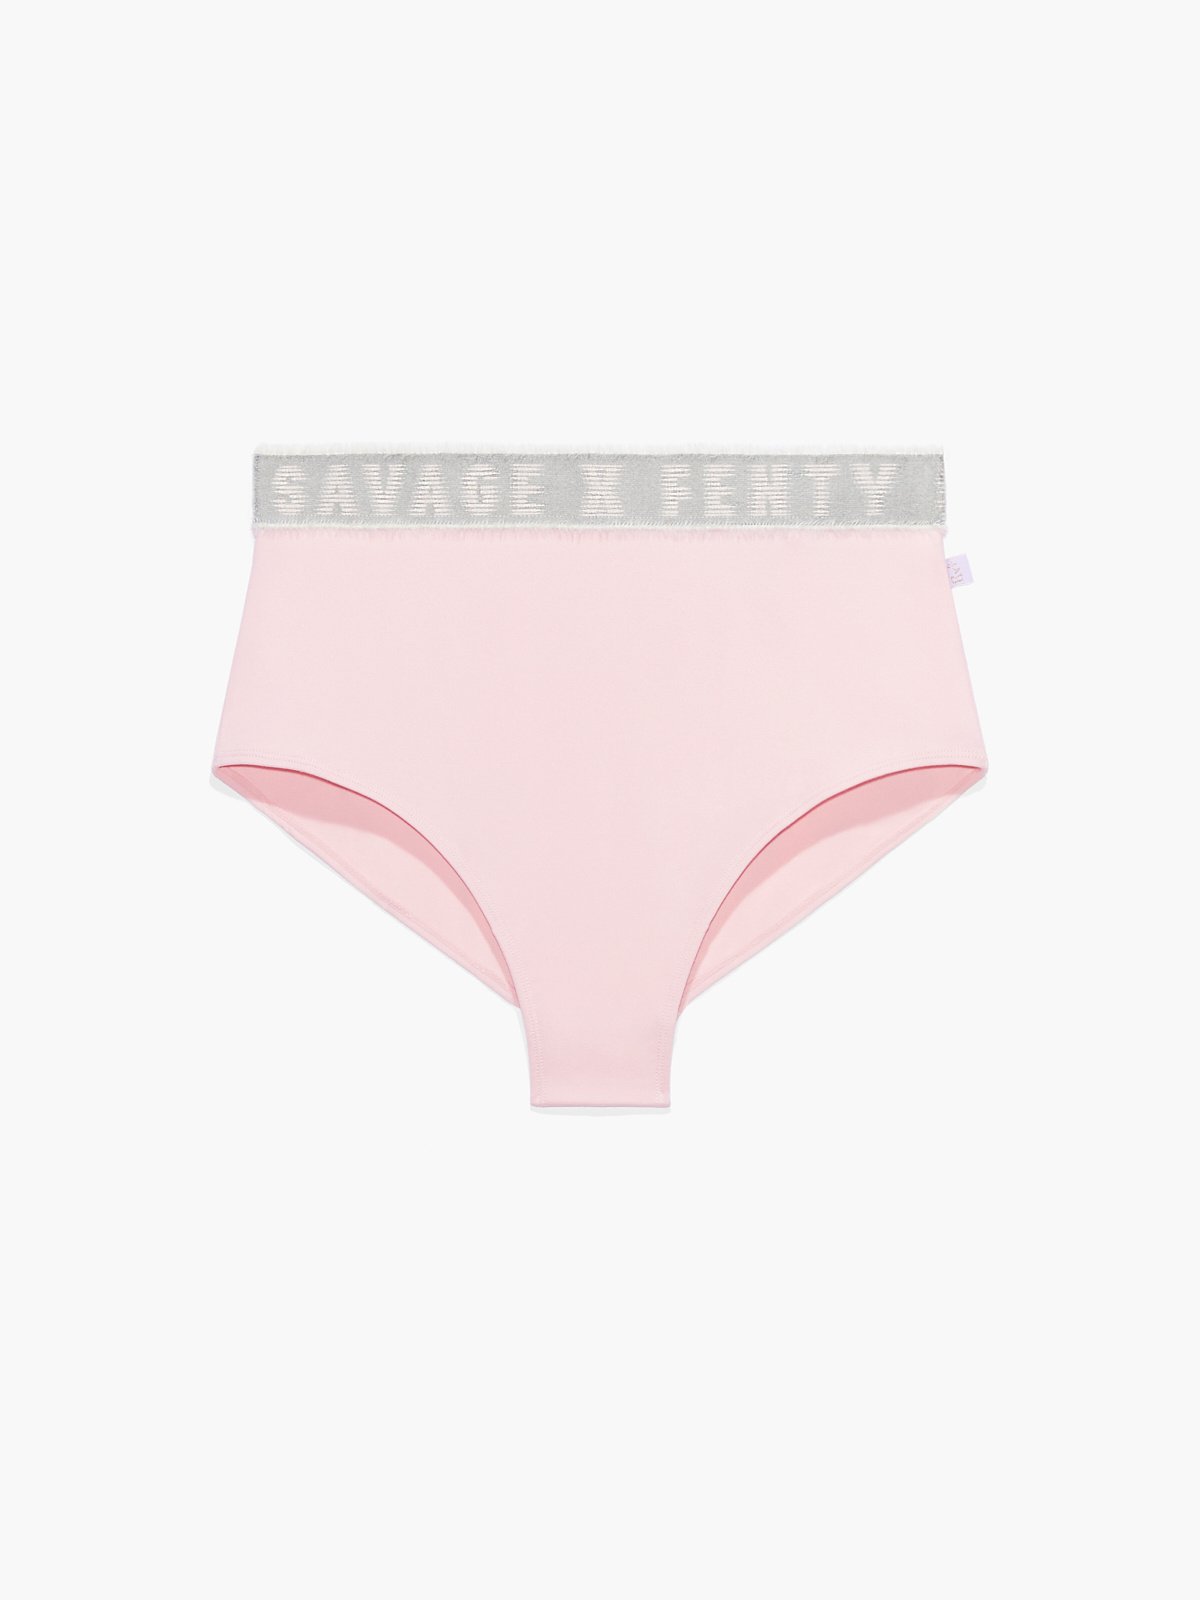 CLF Savage X Cotton Jersey Hot Short in Pink